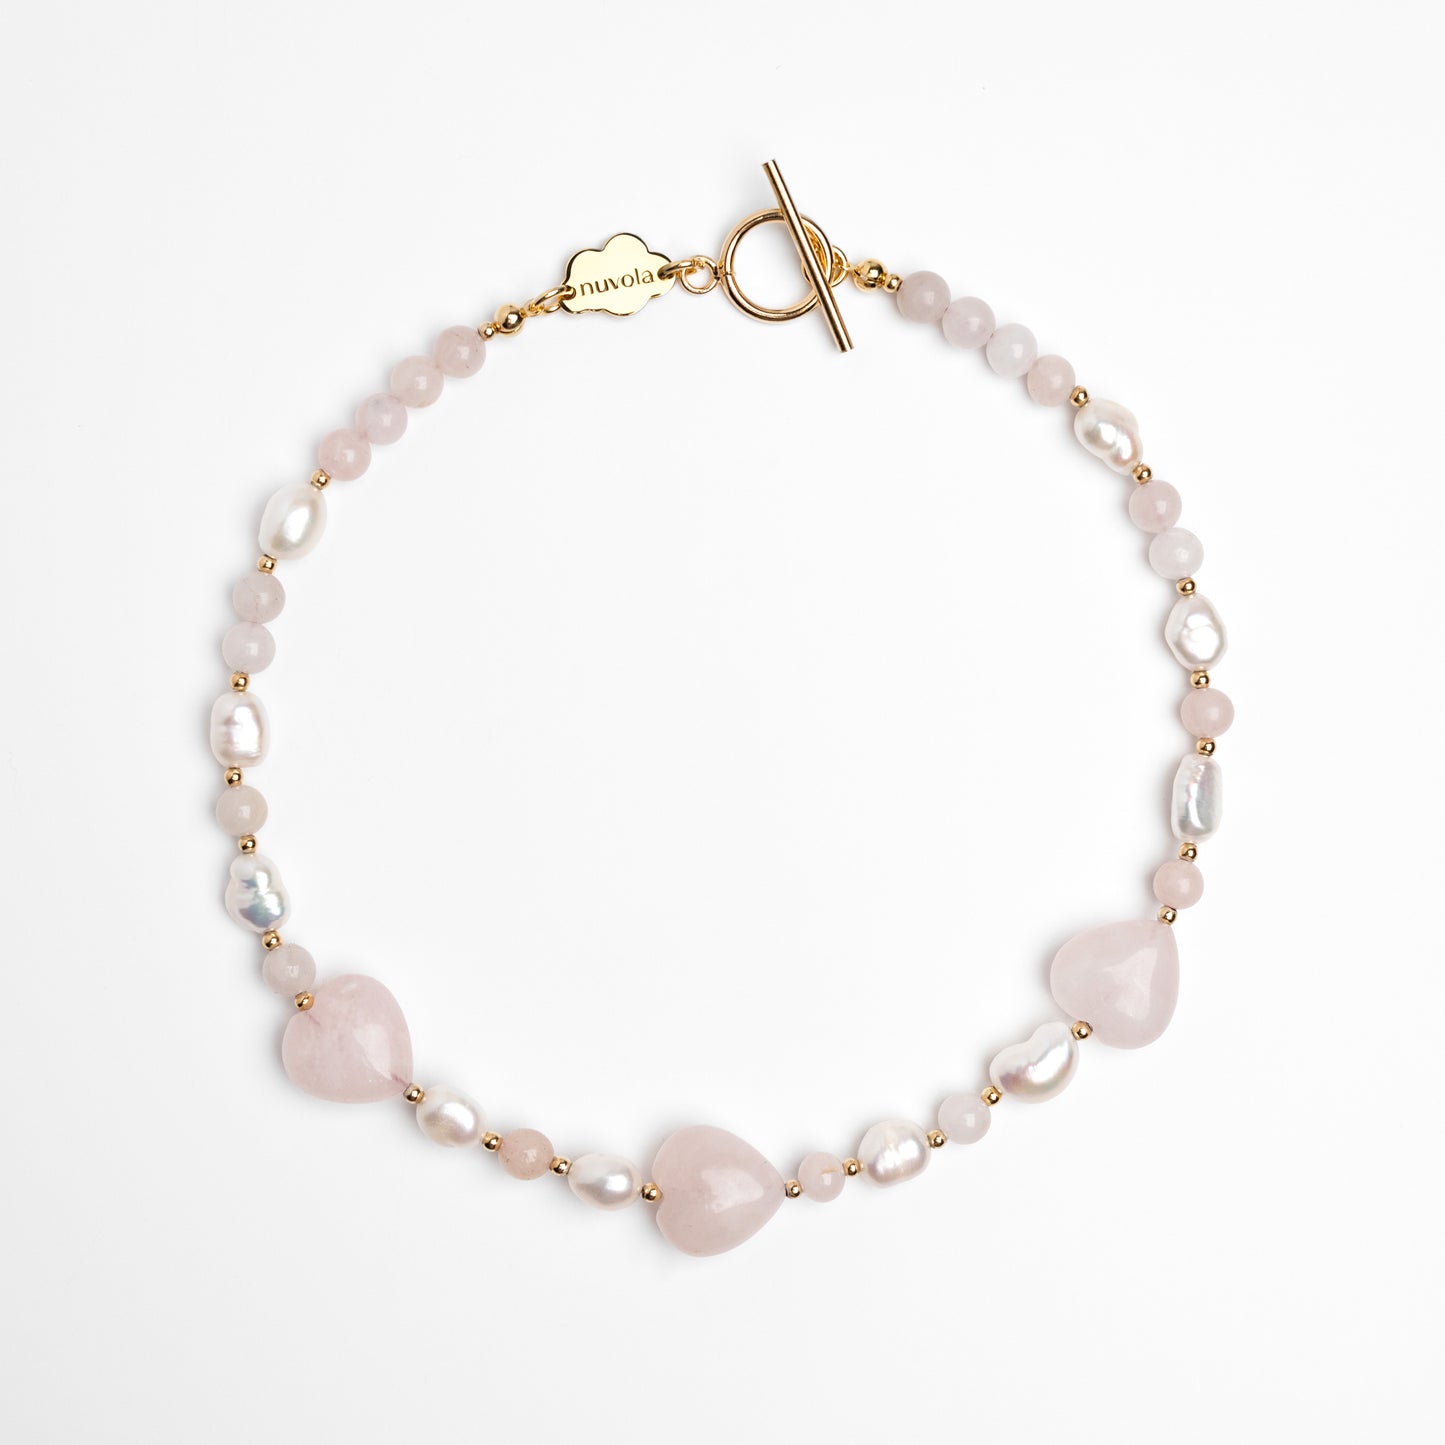 Romantic baroque pearl & quartz necklace